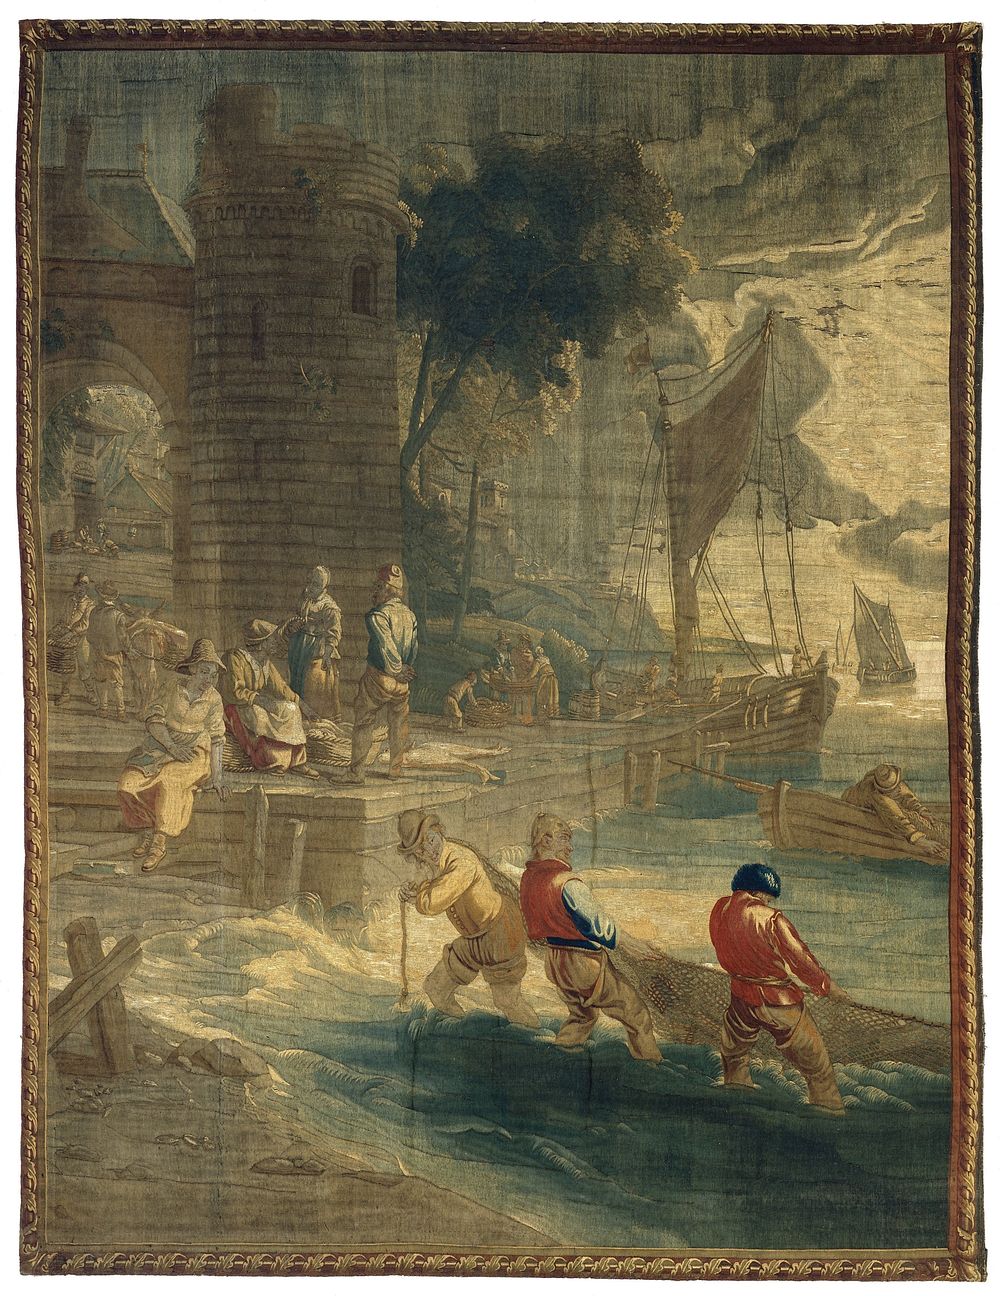 De viskade (1729) by Urbanus Leyniers, Jacob van Helmont and Augustin Coppens